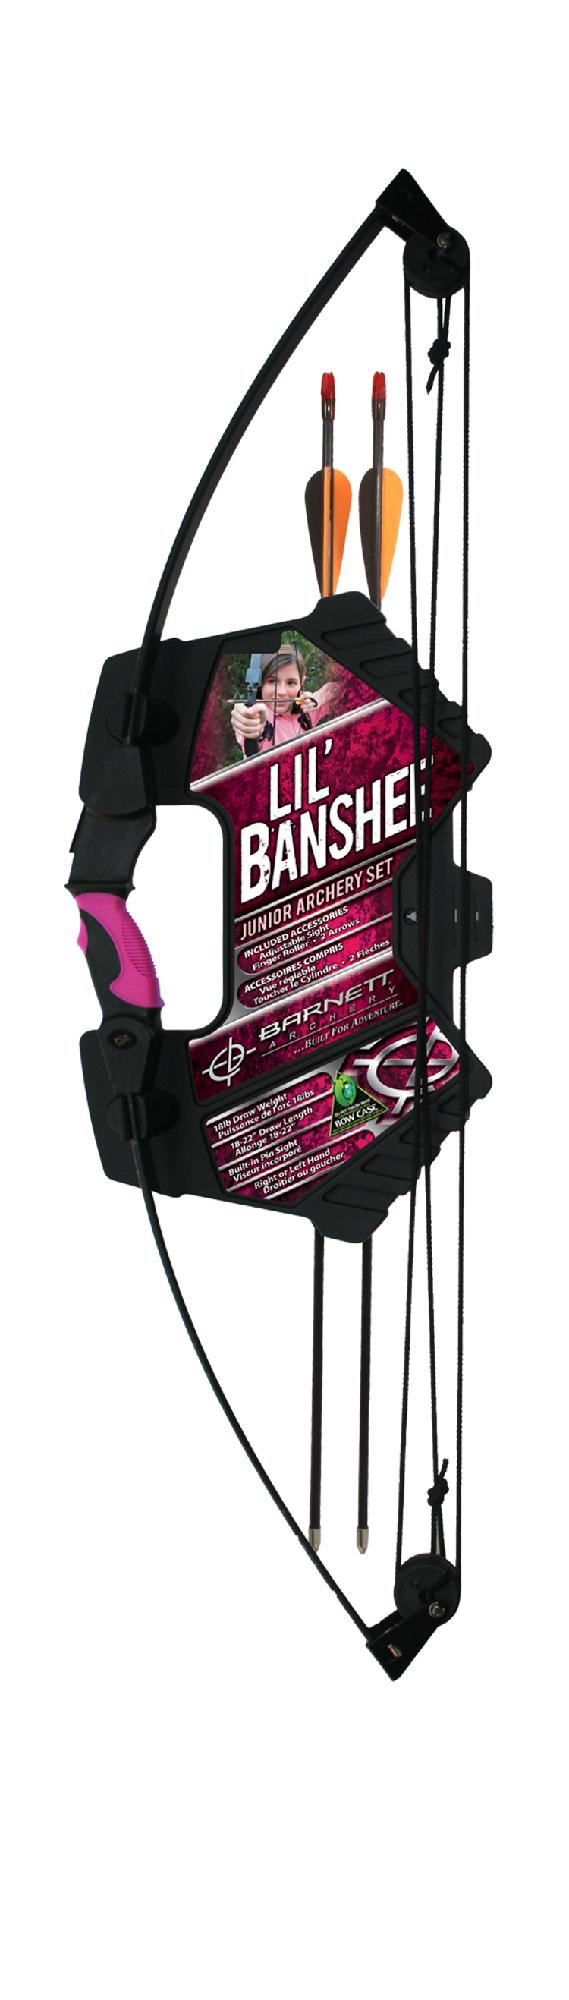 Lil' Banshee Jr. Compound Archery Set - Pink